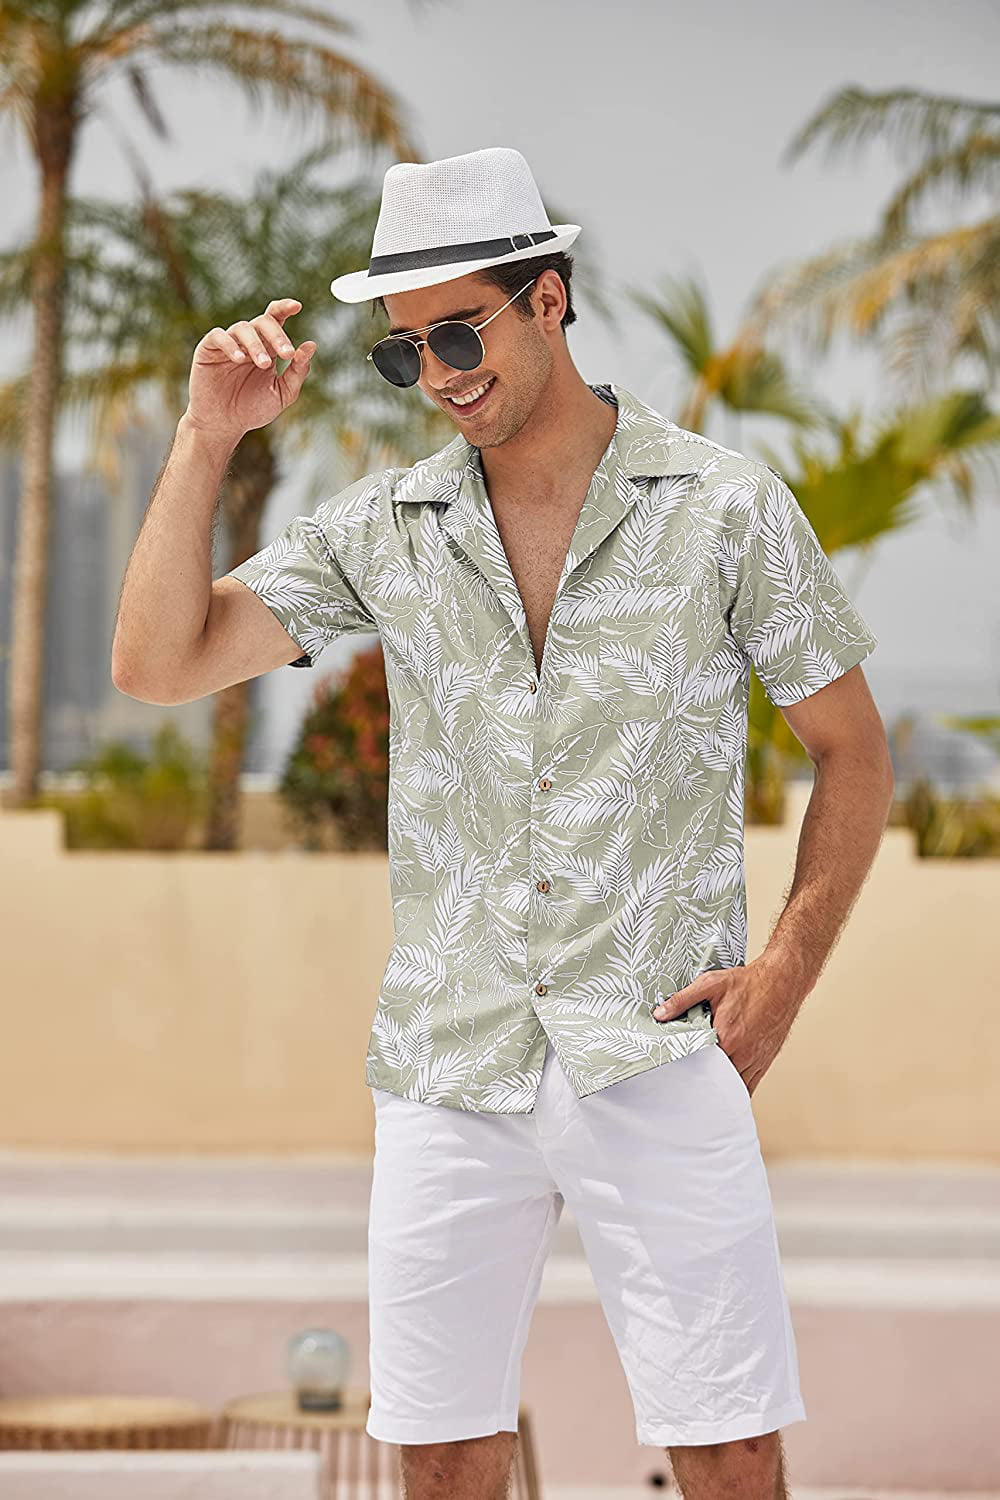 COOFANDY Men's Hawaiian Shirt Short Sleeve Casual Button Down Floral Printed Beach Shirts with Pocket